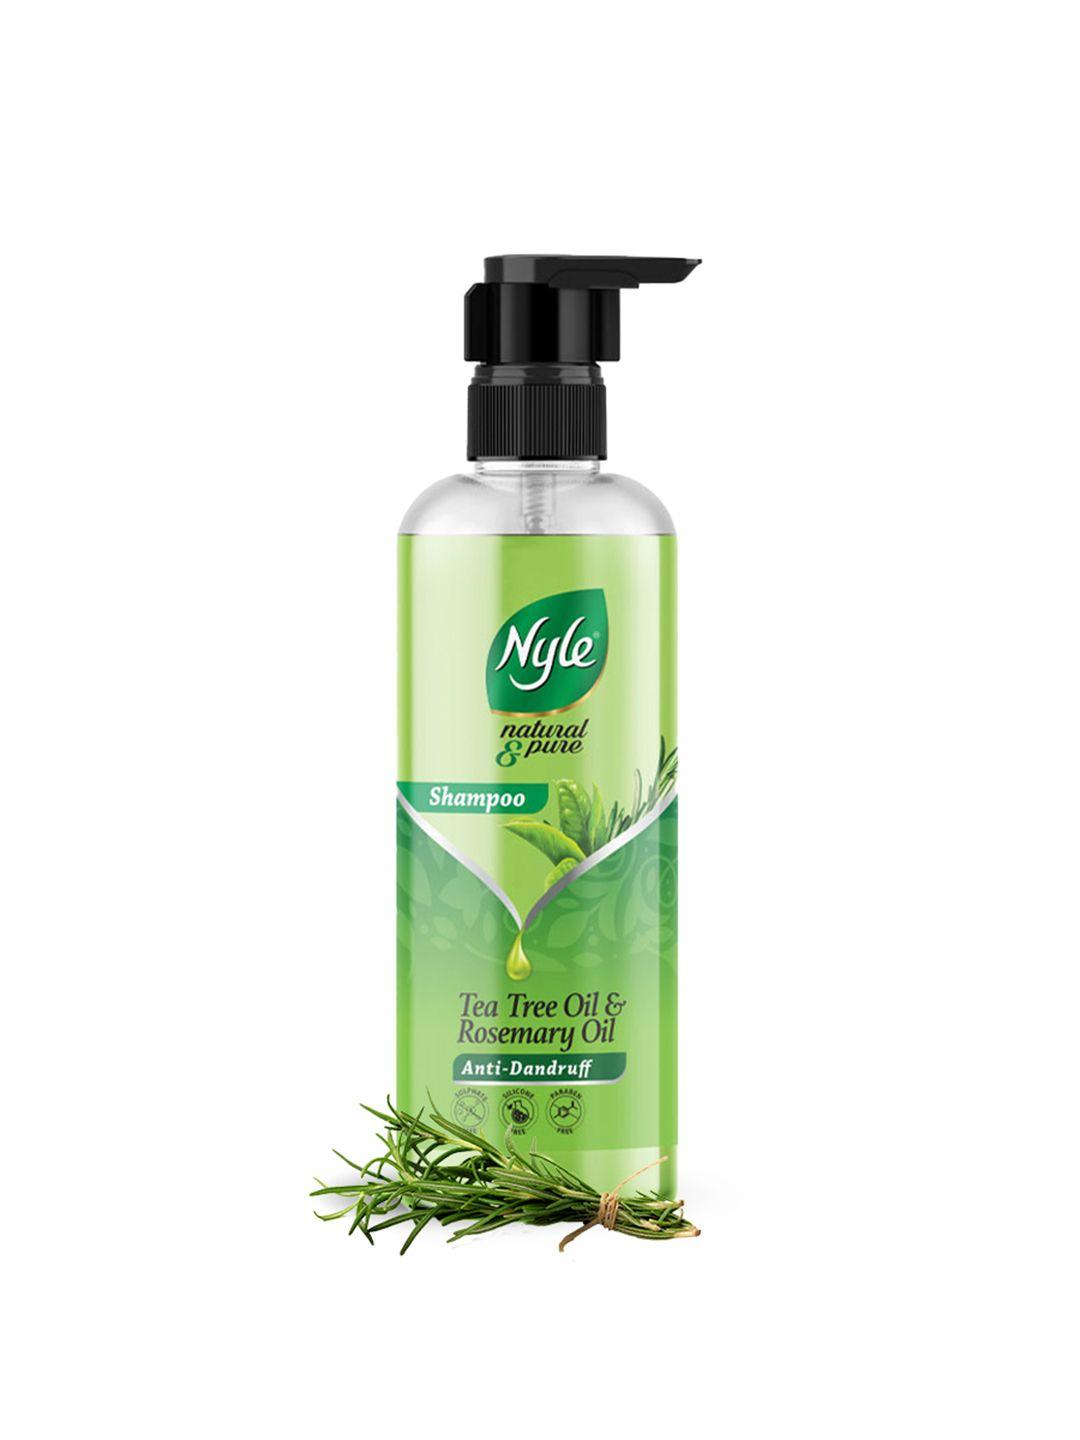 nyle naturals anti-dandruff shampoo with tea tree oil & rosemary oil - 300ml